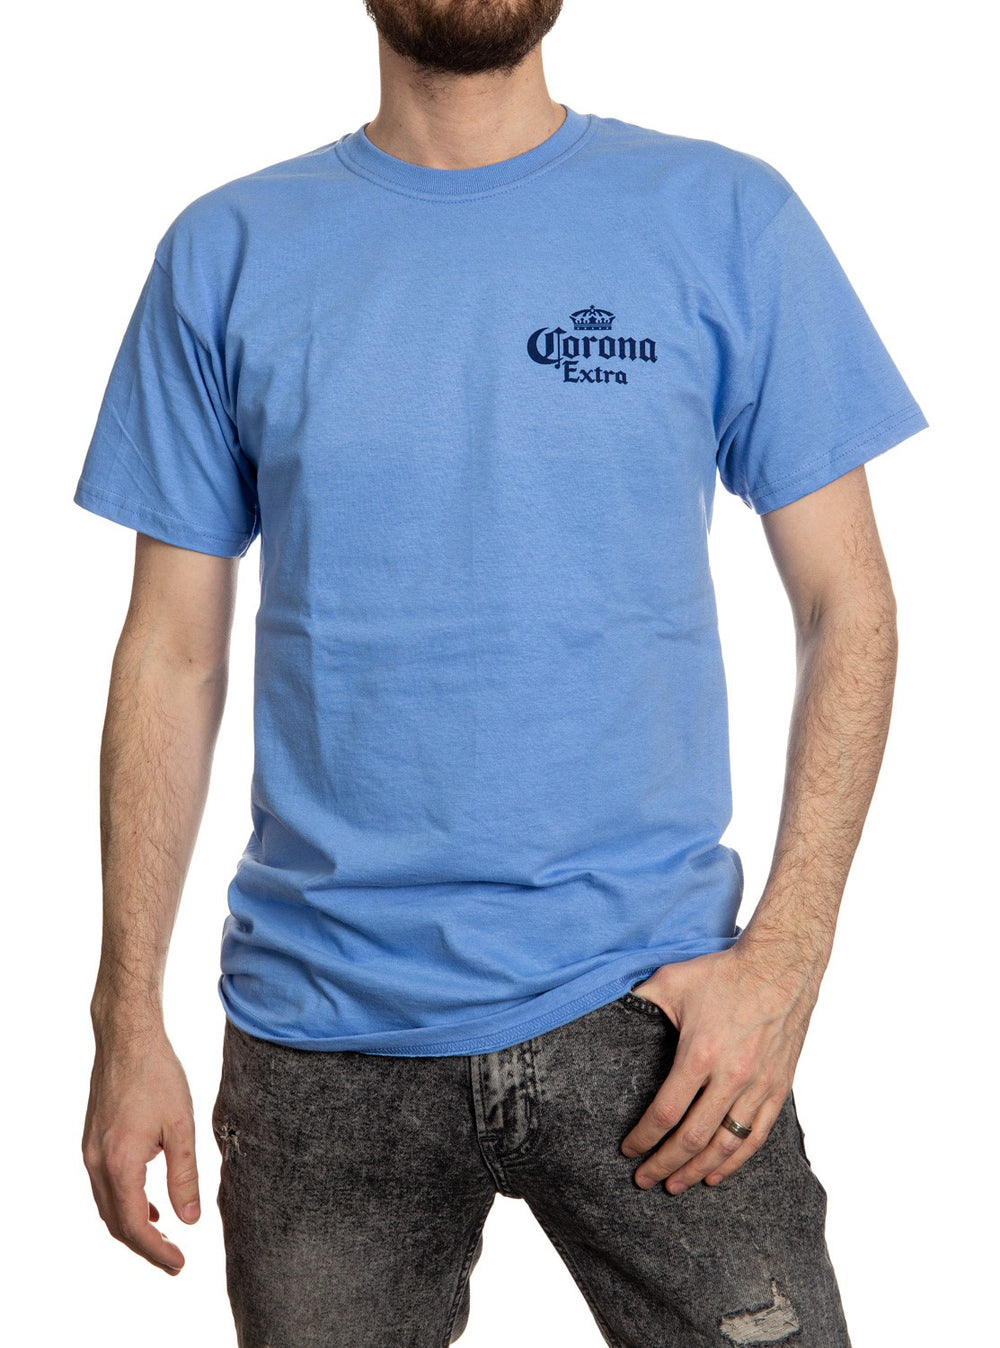 Corona Extra Beachside T-Shirt In Carolina Blue Front.